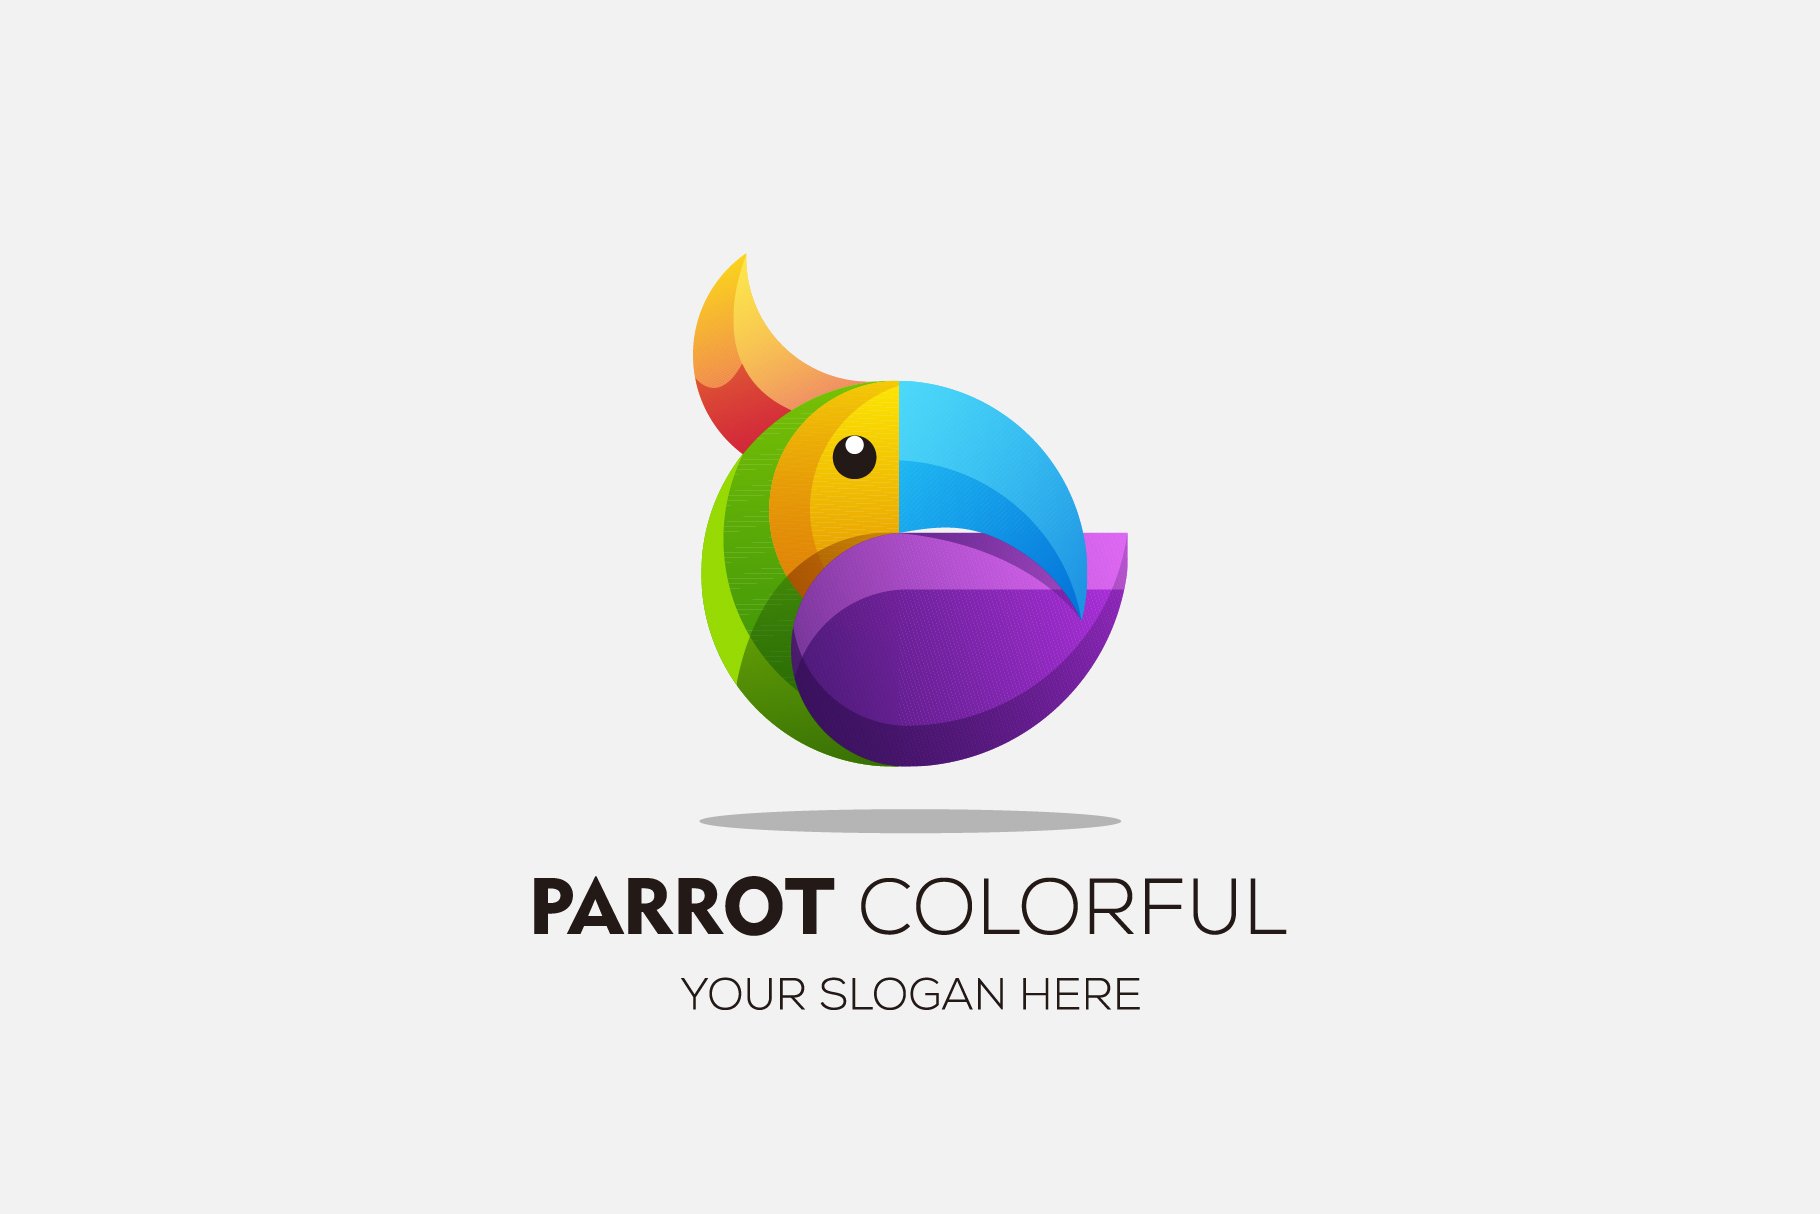 gradient parrot logo design colorful cover image.